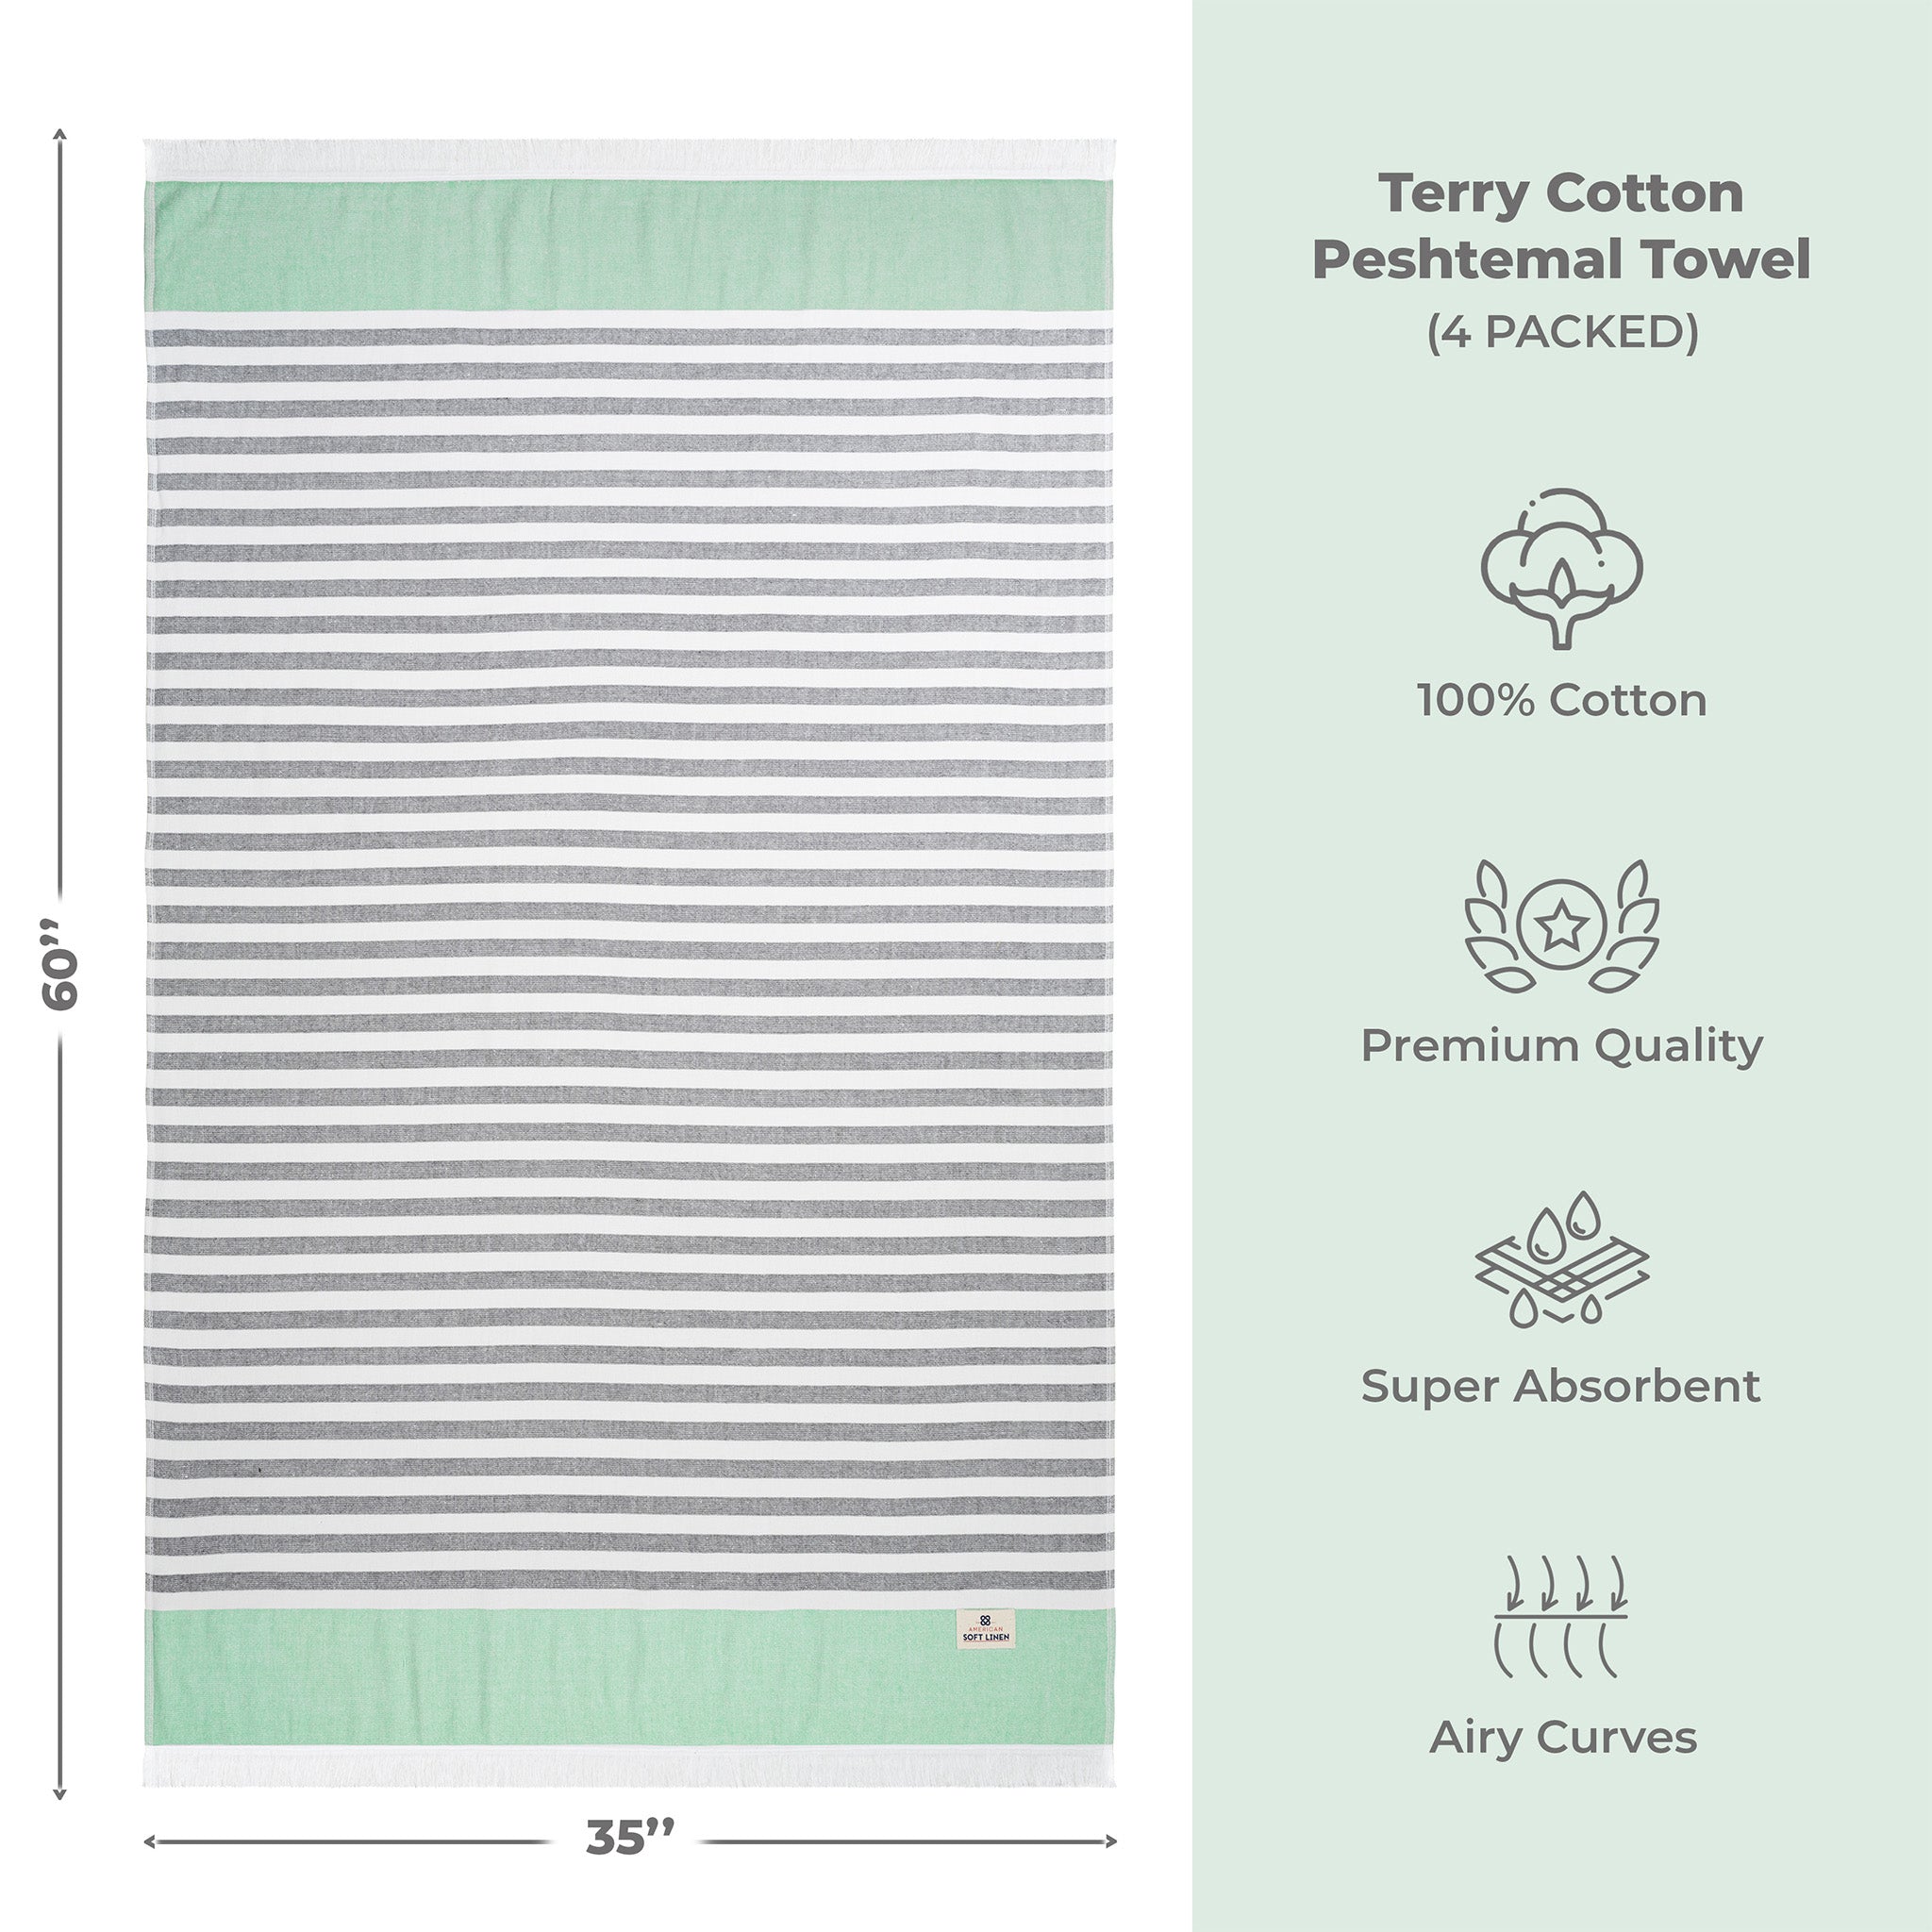 4 Packed 100% Cotton Terry Peshtemal & Beach Towel Green-03